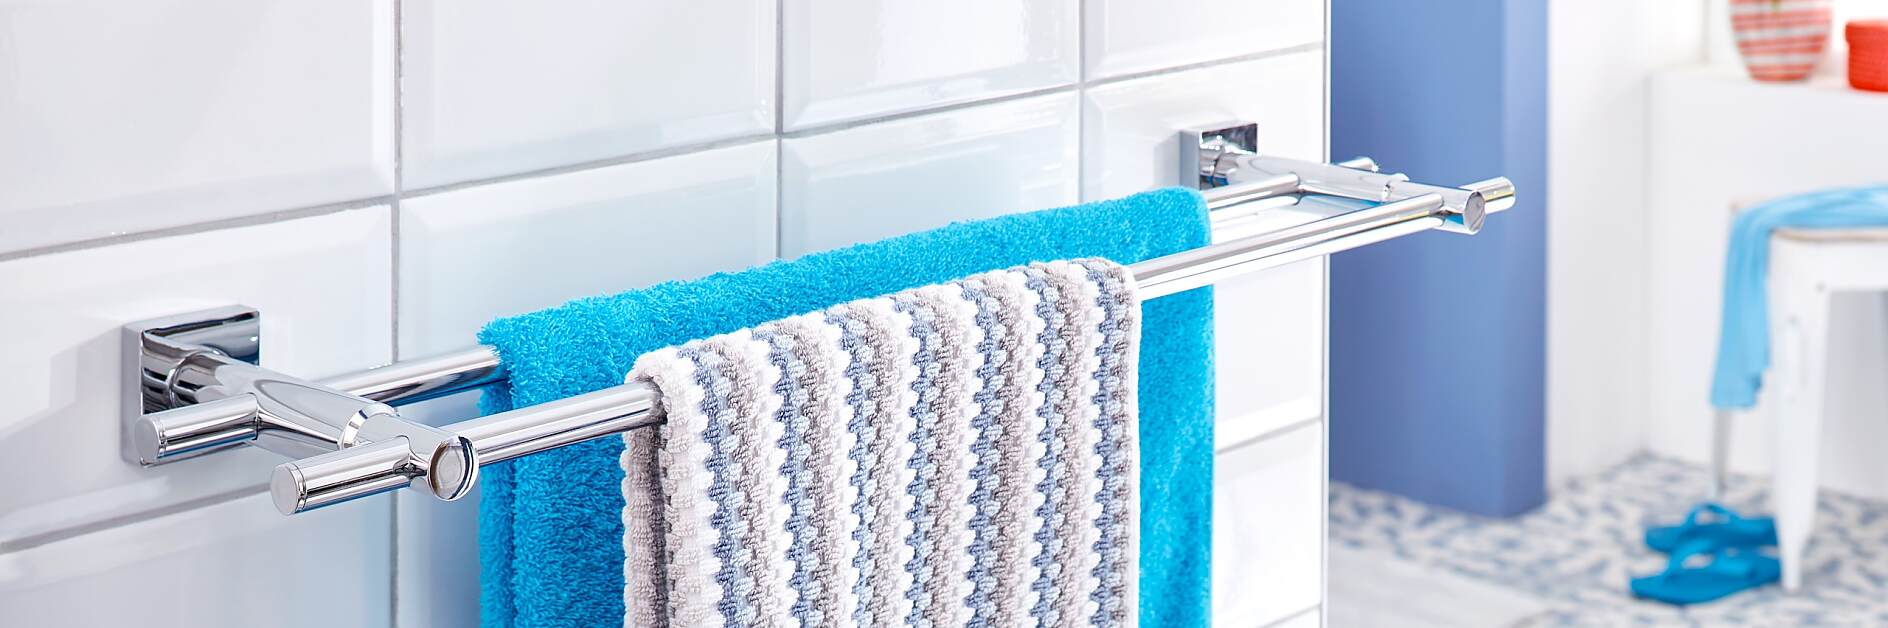 Better Homes & Gardens Bathroom Towel Holder, Plated Nickel